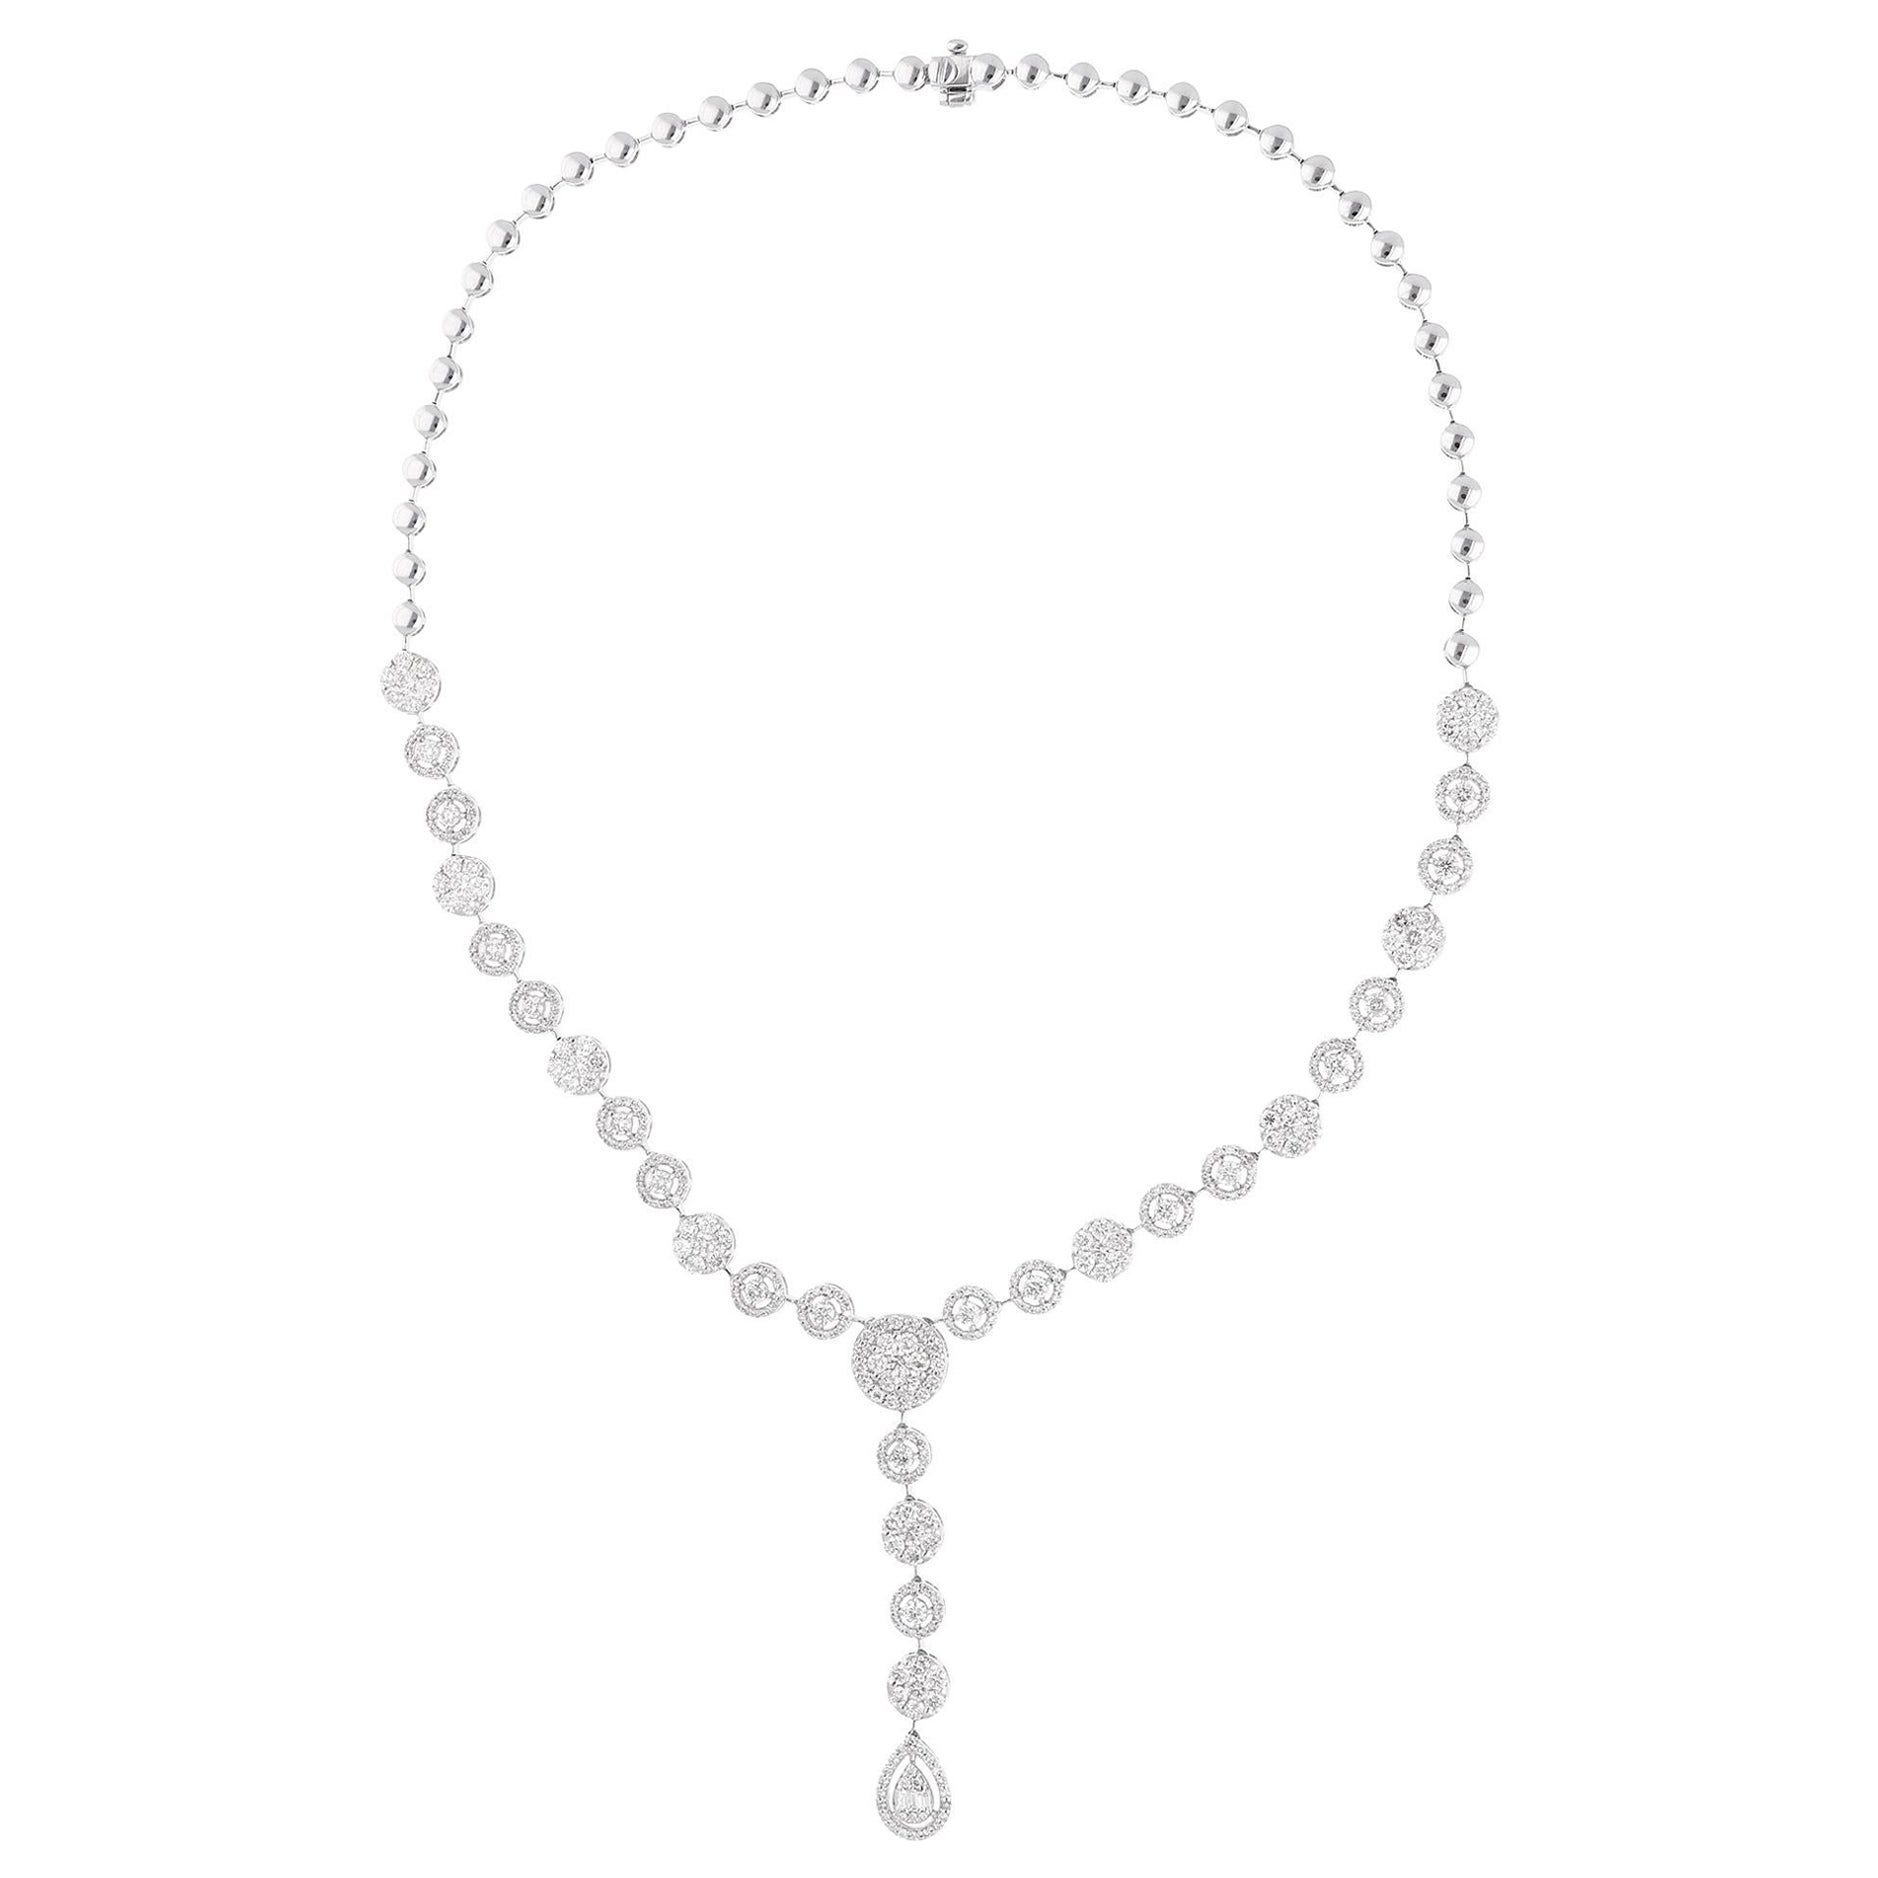 7 Carat SI Clarity HI Color Diamond Lariat Necklace 18 Karat White Gold Jewelry For Sale